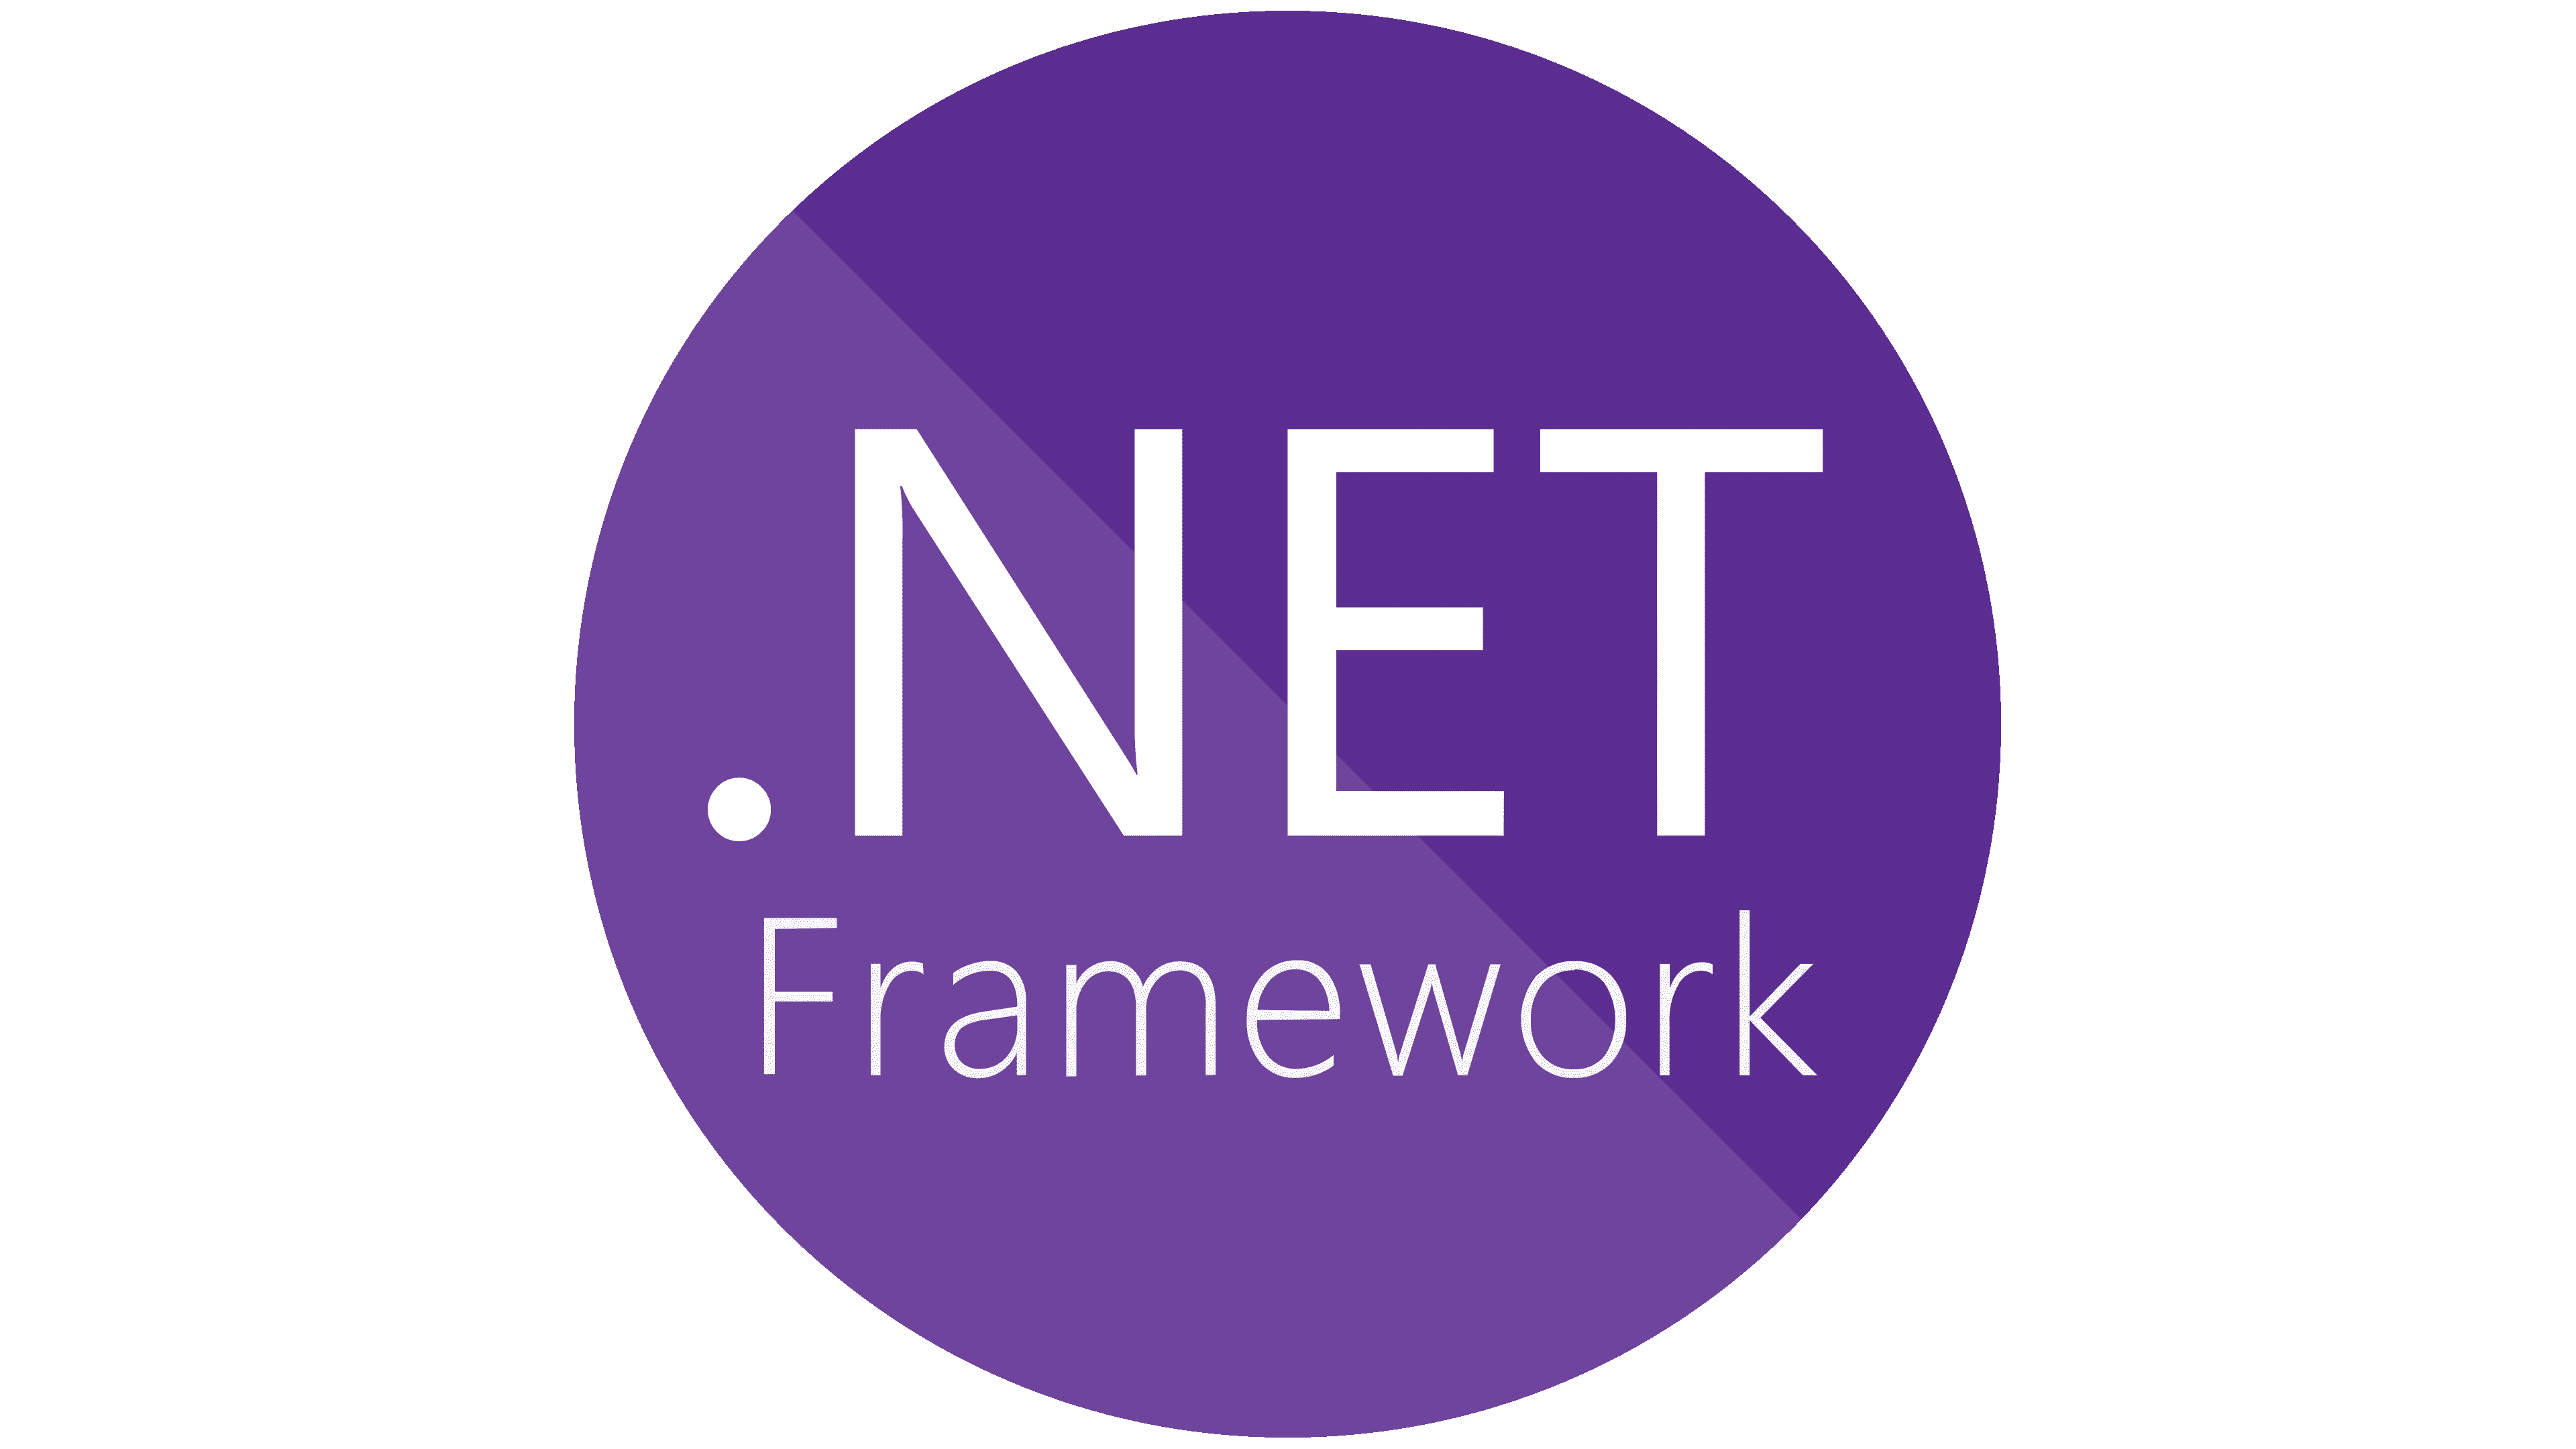 NET Framework Logo, symbol, meaning, history, PNG, brand